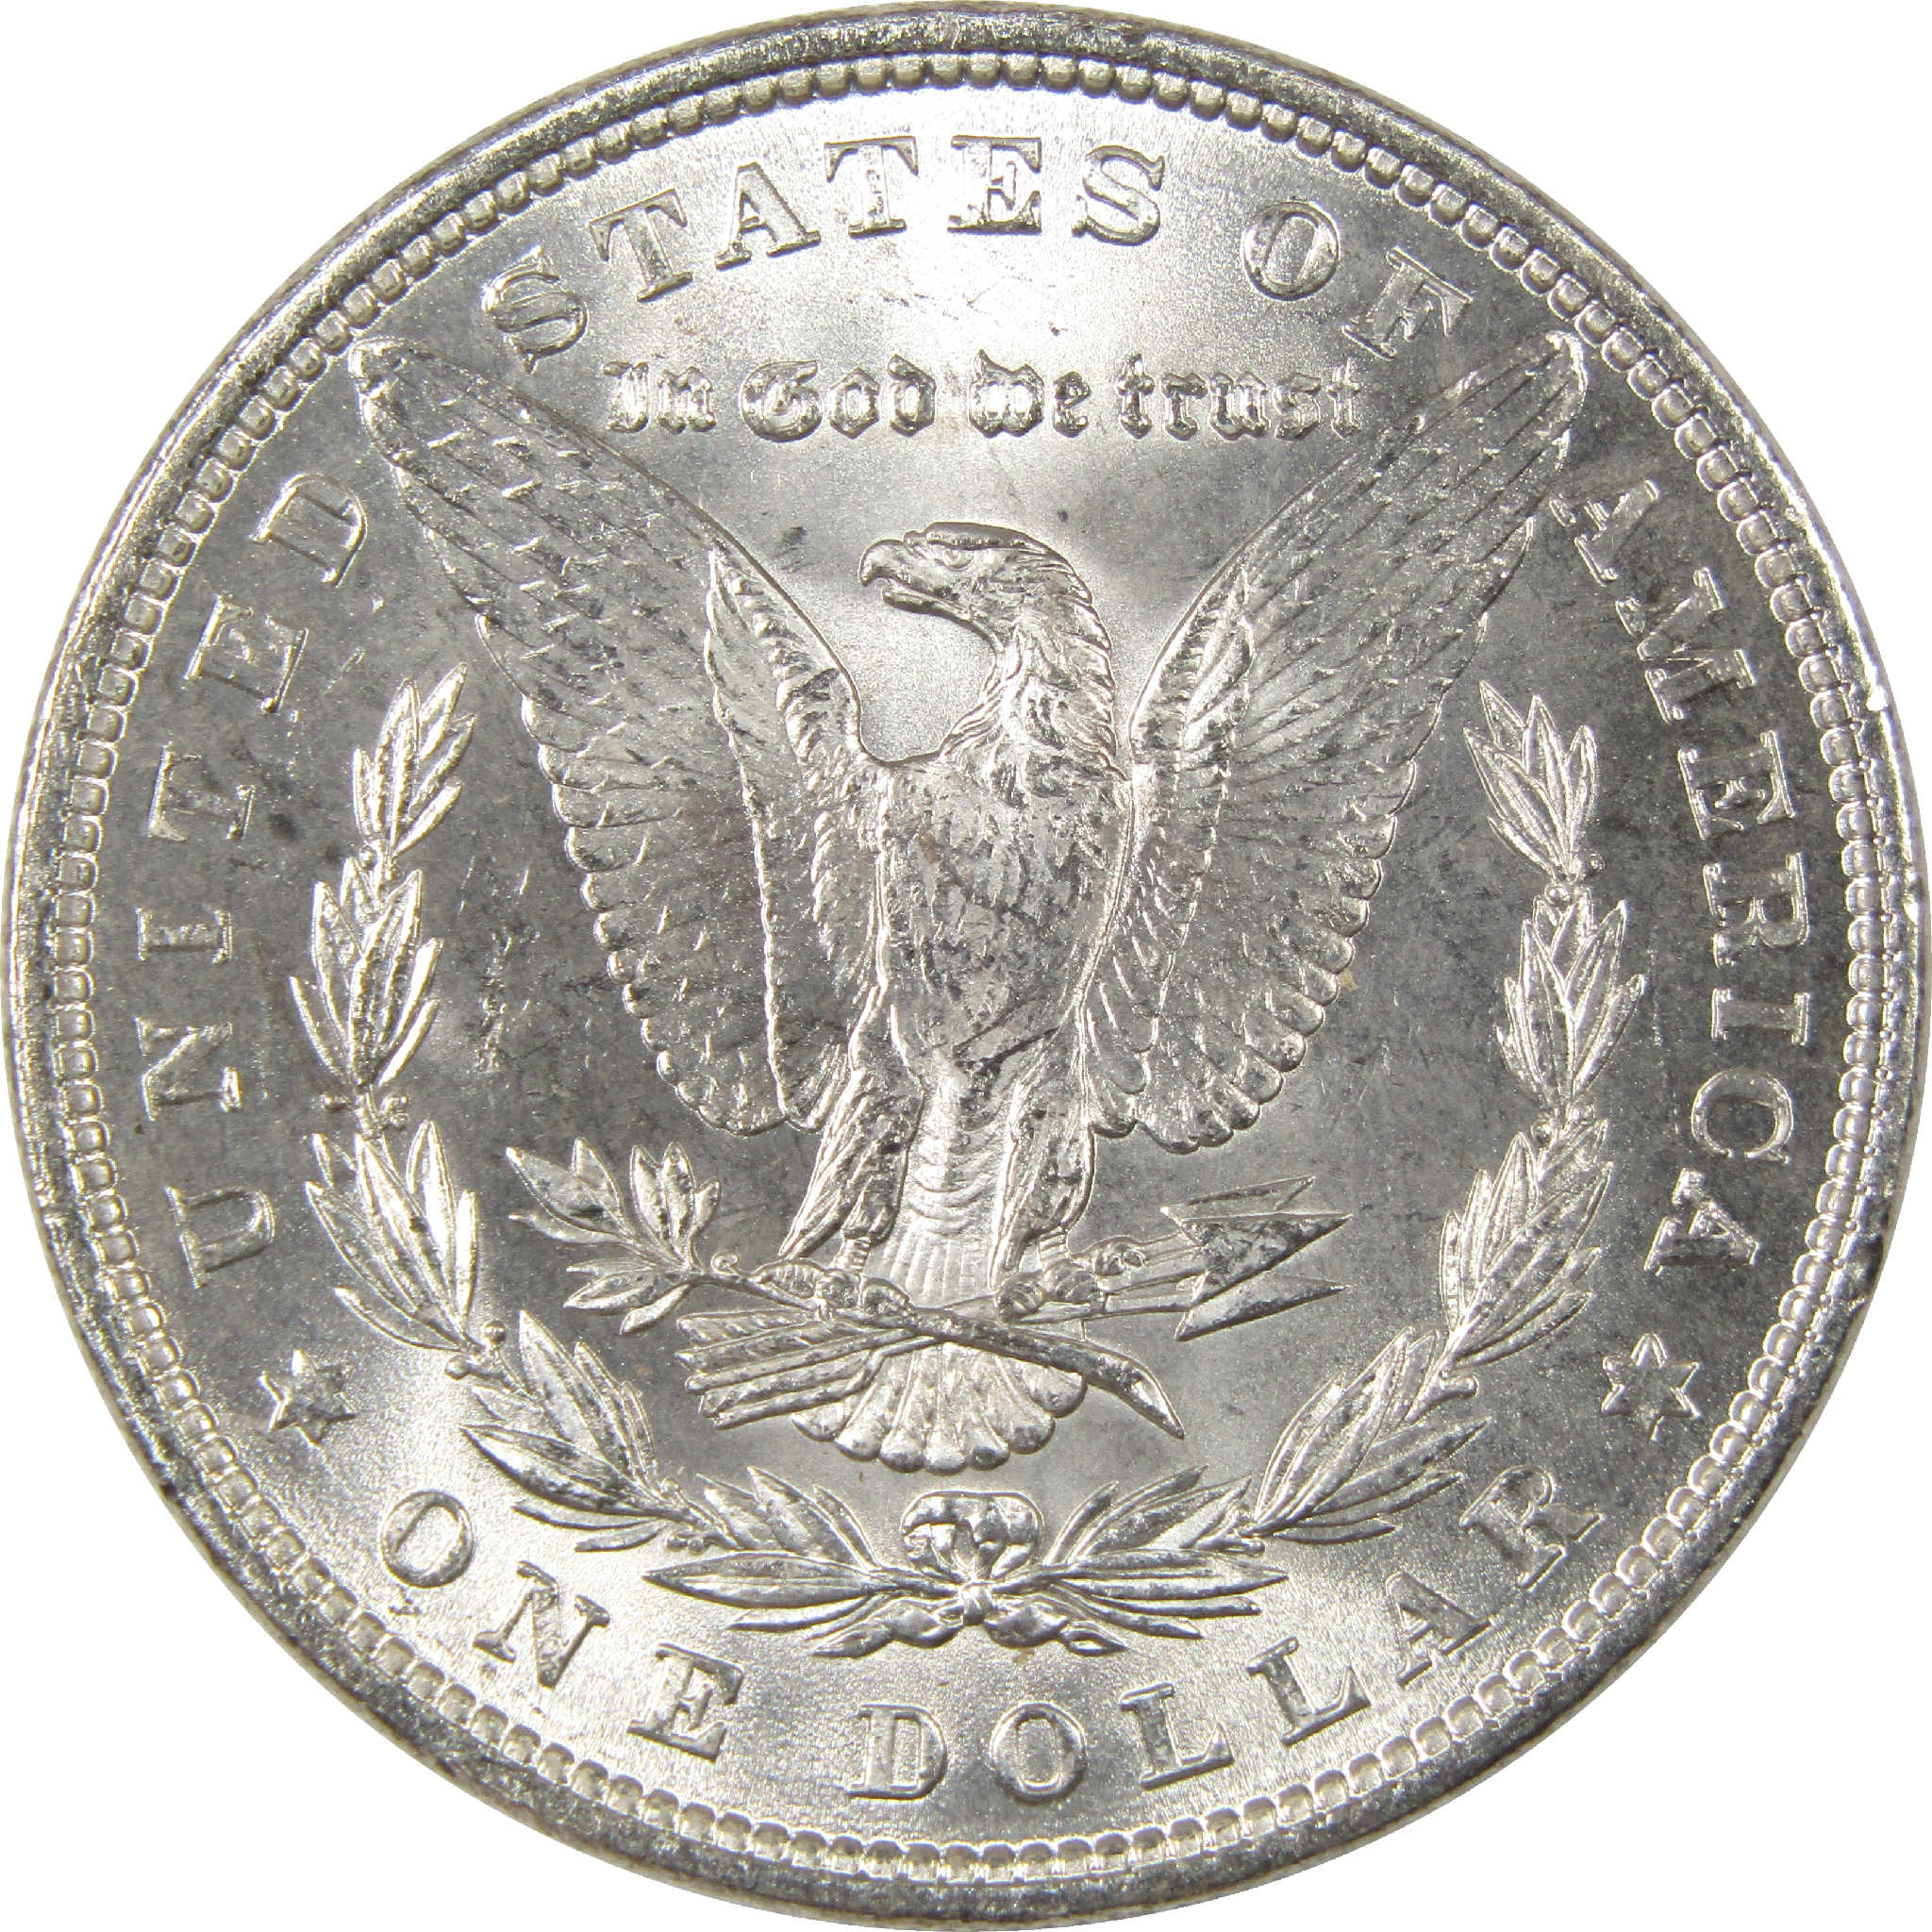 1879 Morgan Dollar BU Choice Uncirculated Silver $1 Coin - Morgan coin - Morgan silver dollar - Morgan silver dollar for sale - Profile Coins &amp; Collectibles